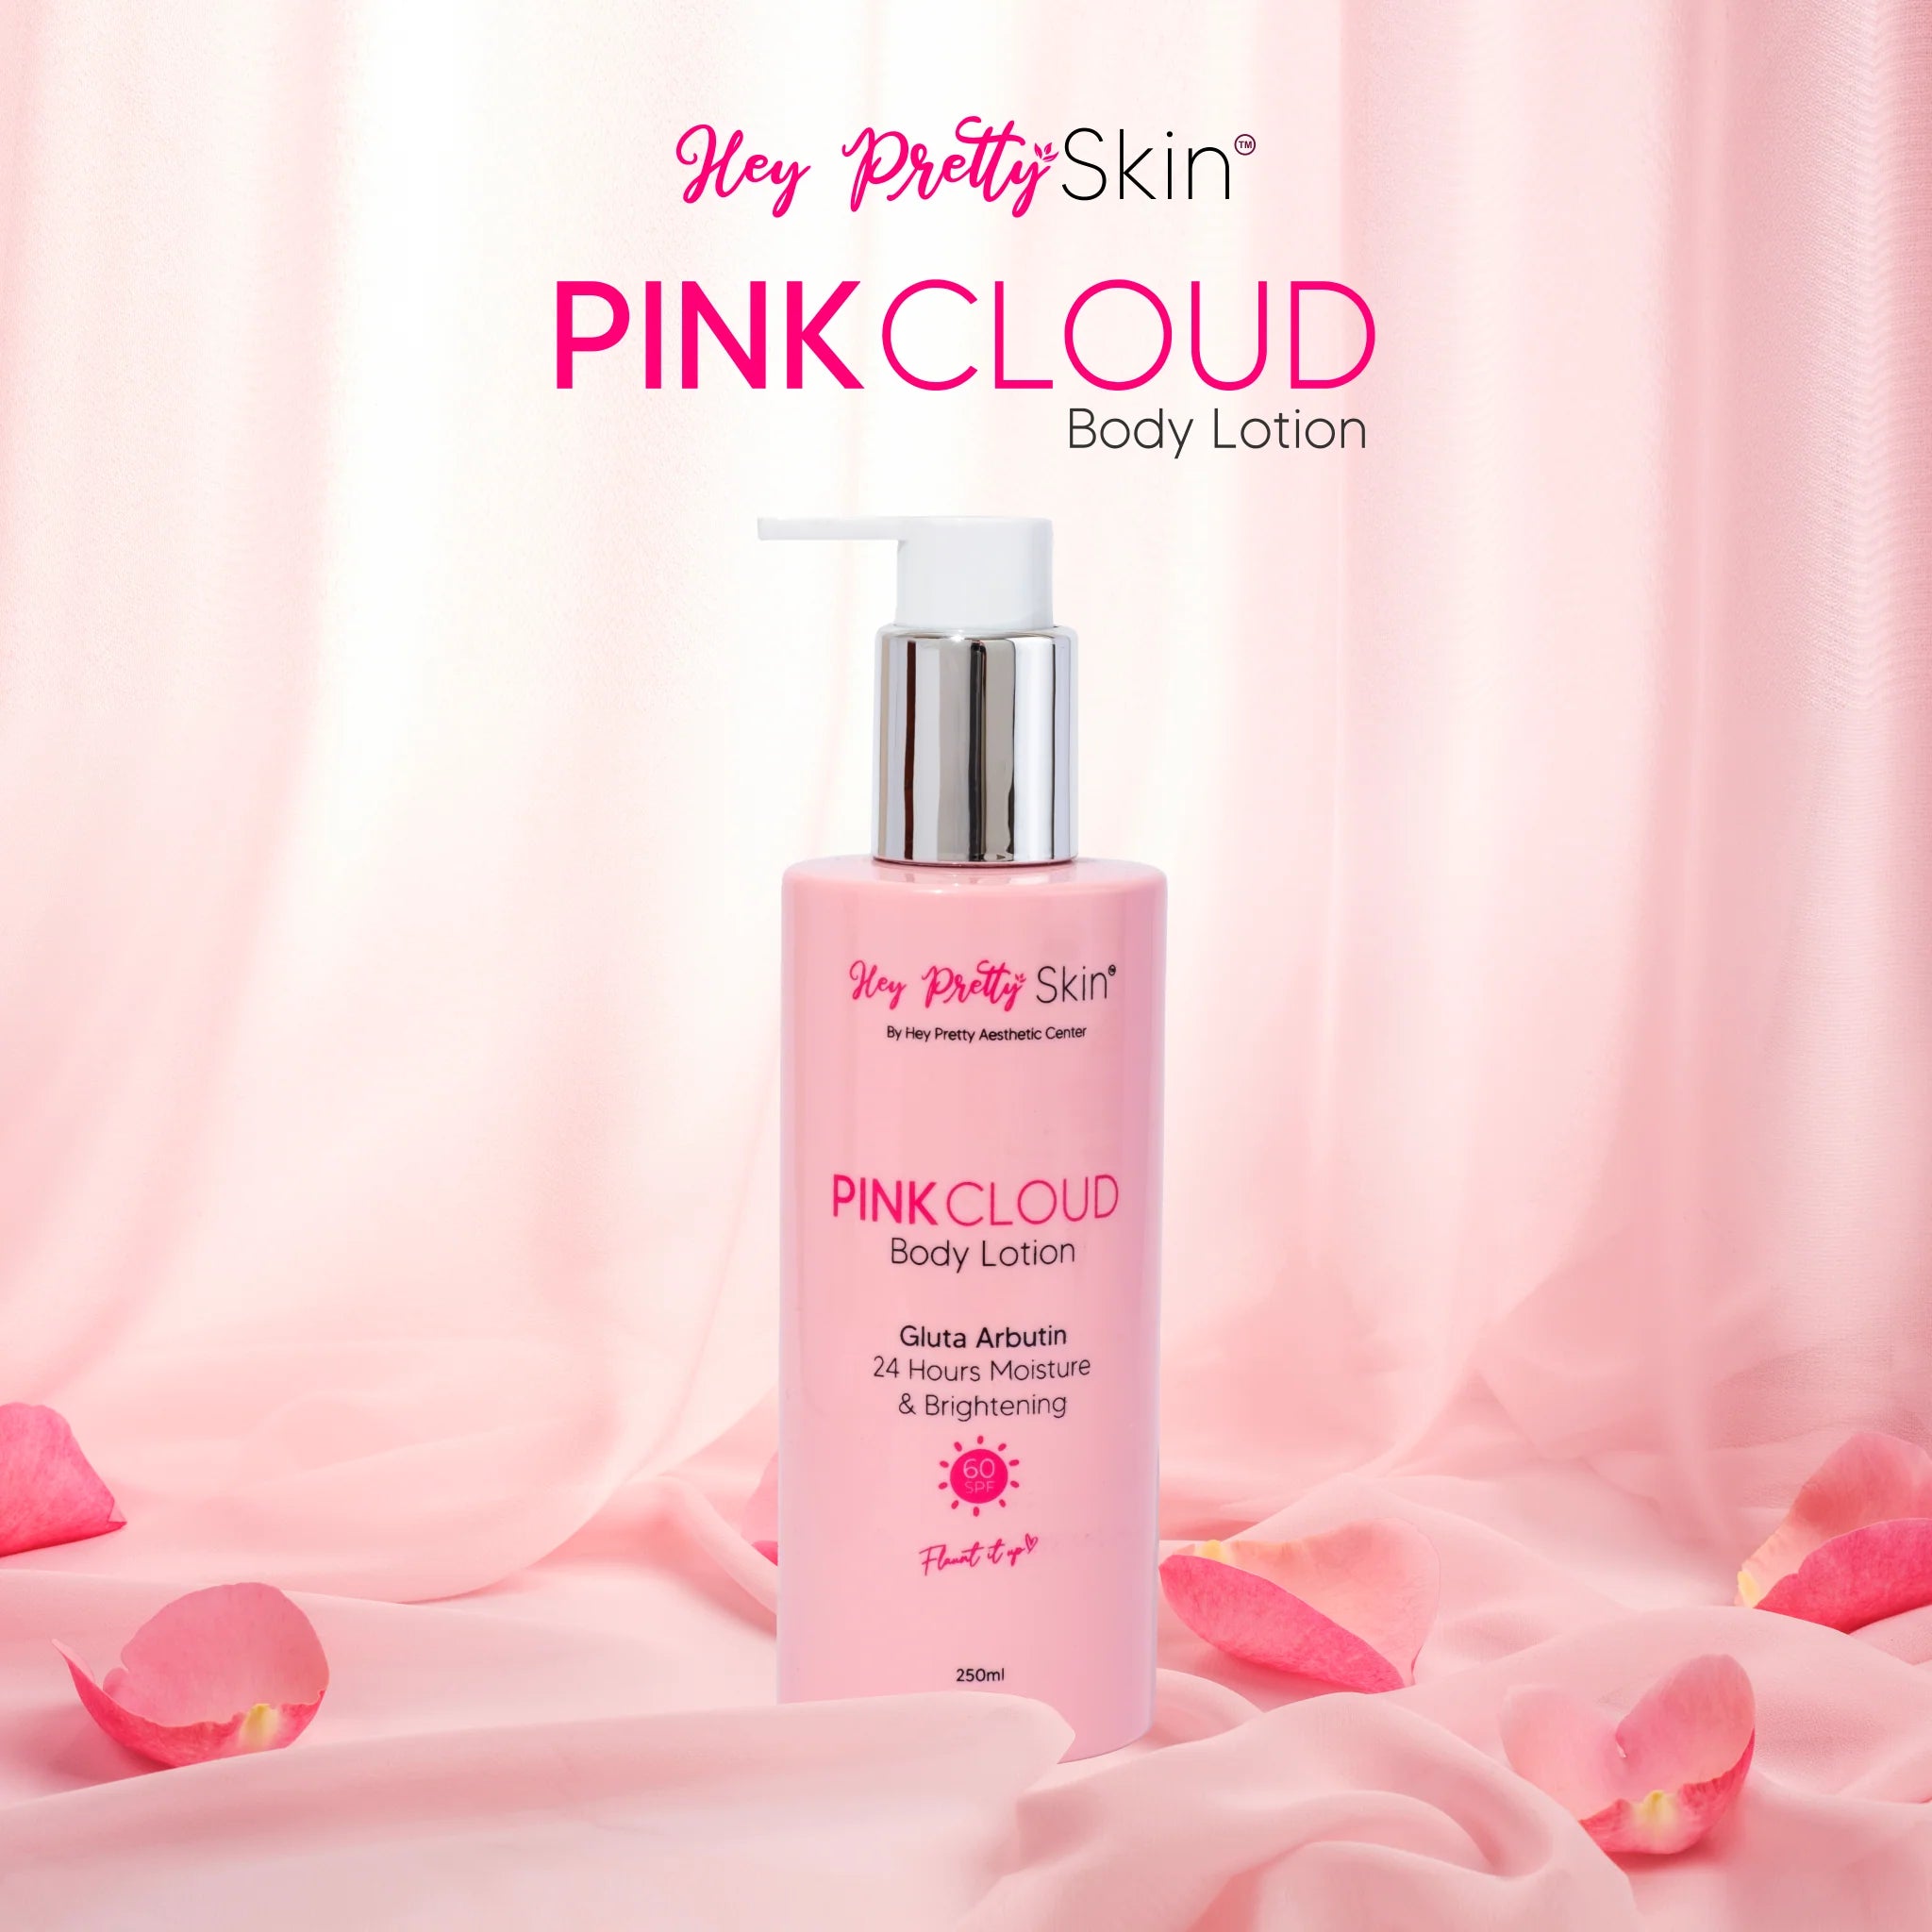 Hey Pretty Skin Pink Cloud Body Lotion 250ml